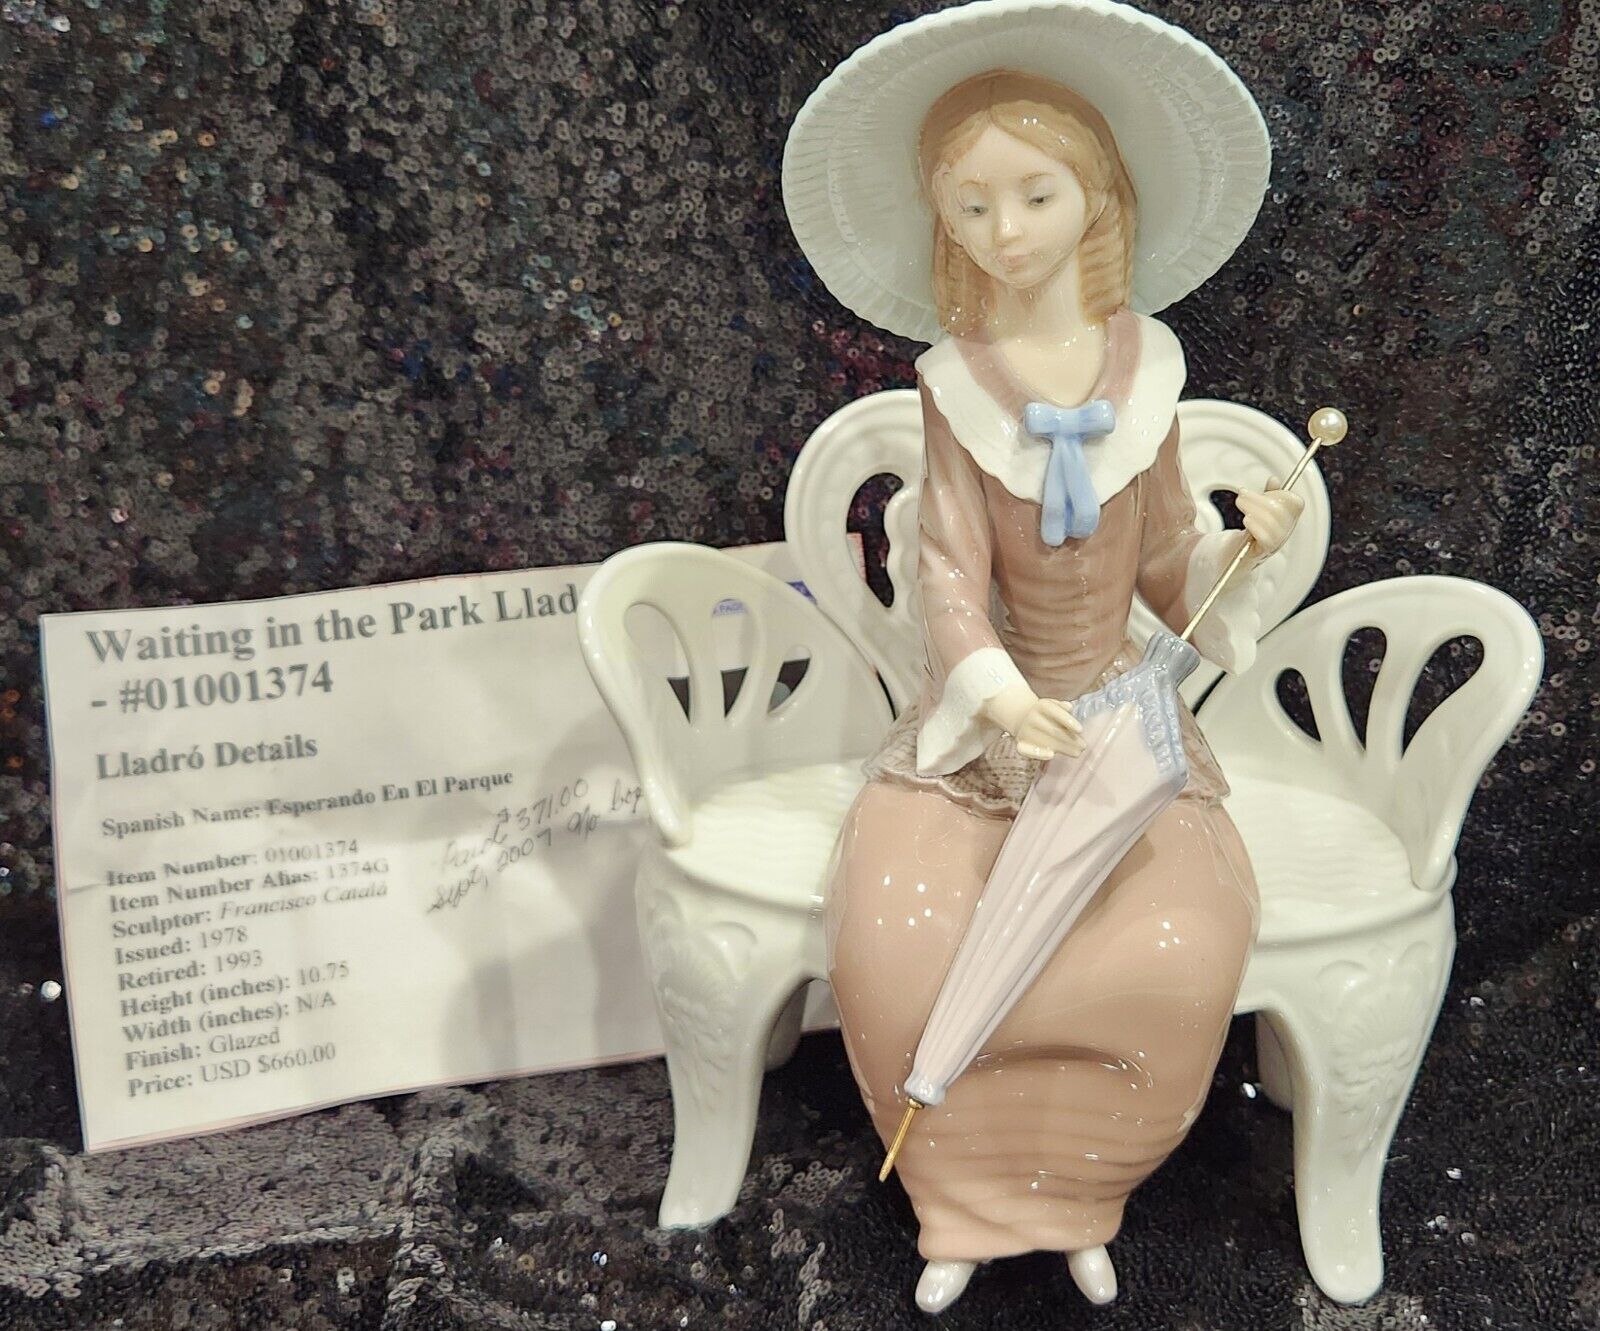 lladro Spain Figurine 1374 Waiting In The Park. Rare Retired Lladro w/ receipt